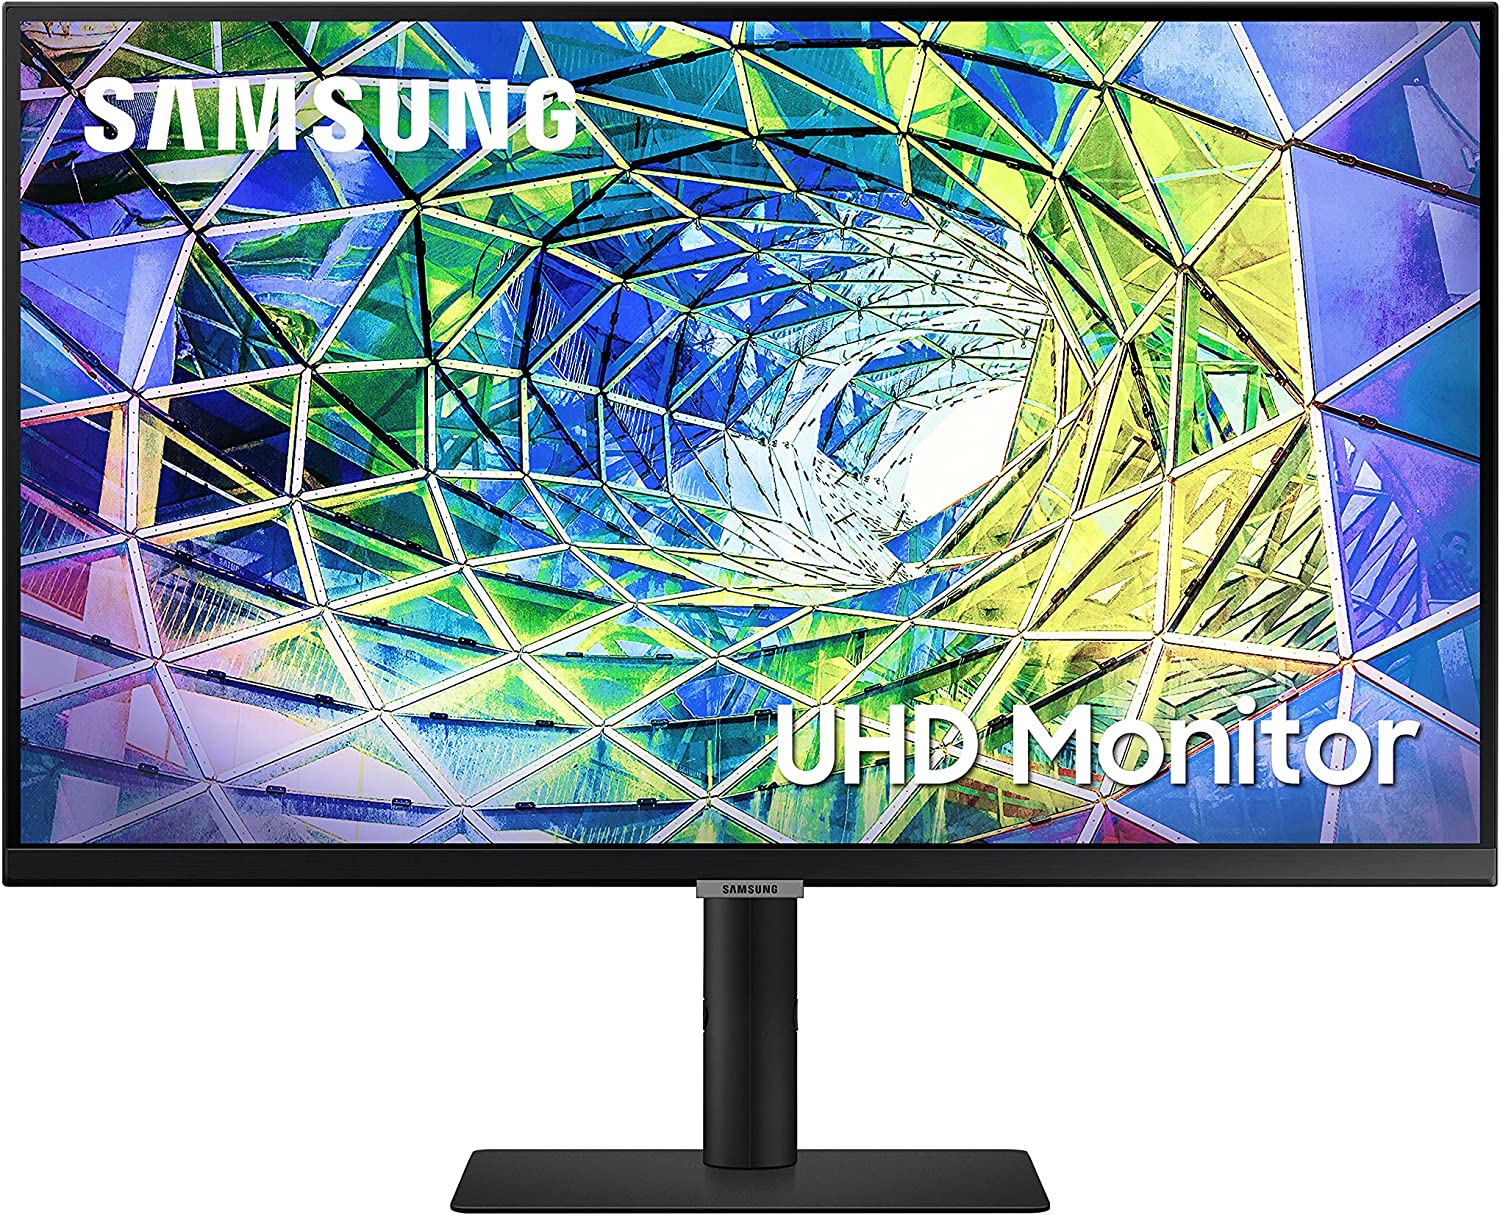 27" Samsung LS27A800UNNXZA 4K UHD HDR Monitor $245 + free s/h Amazon